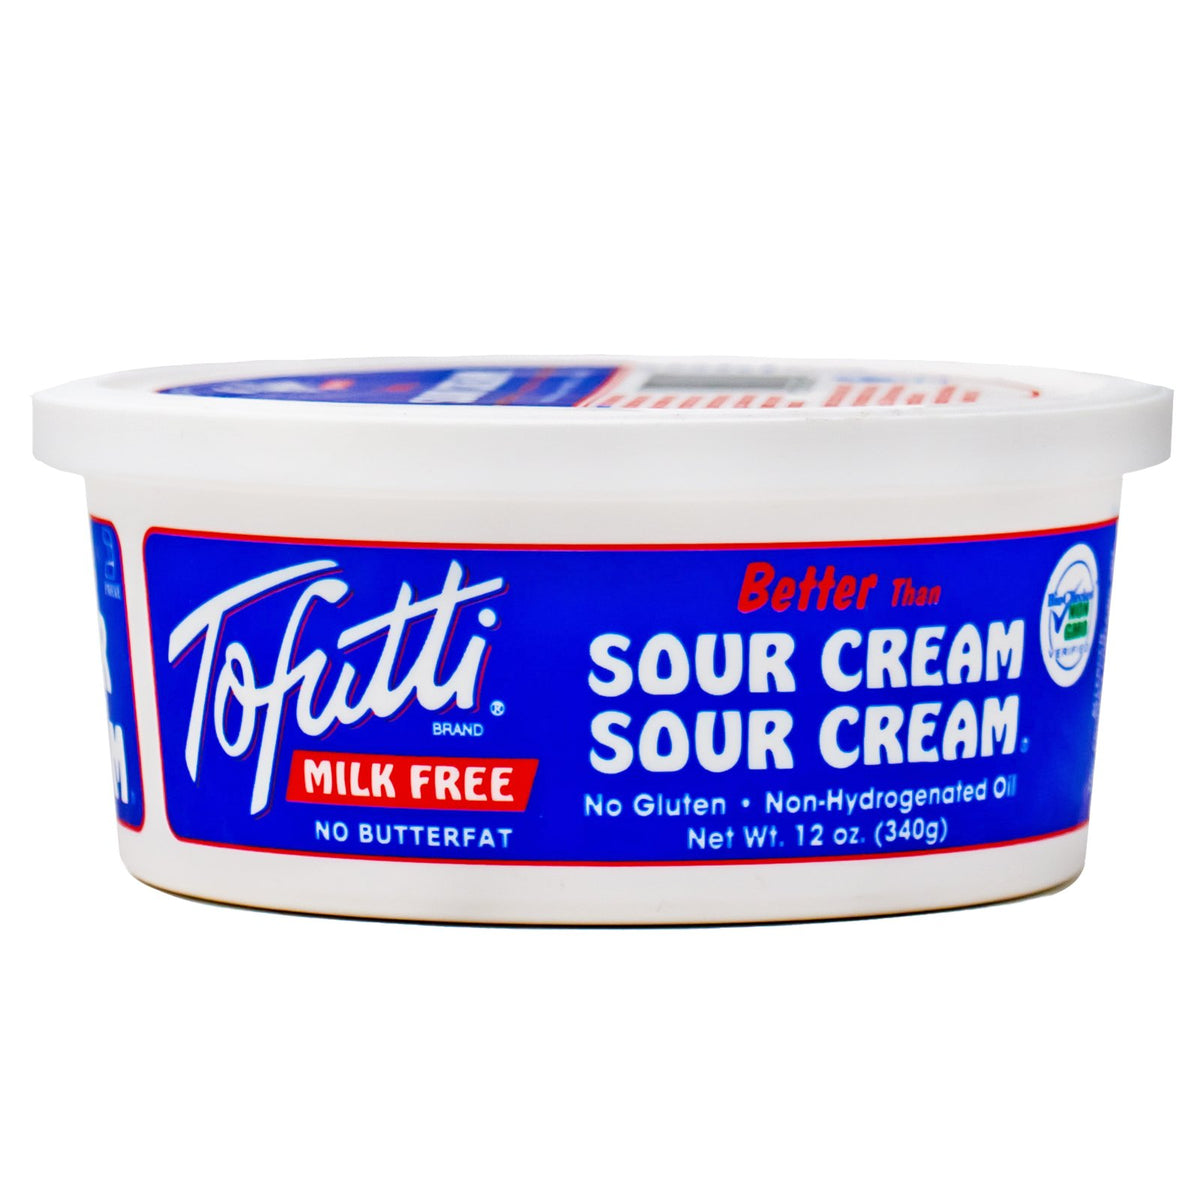 Follow Your Heart Dairy Free Vegan Sour Cream, 16 Ounce -- 4 per case